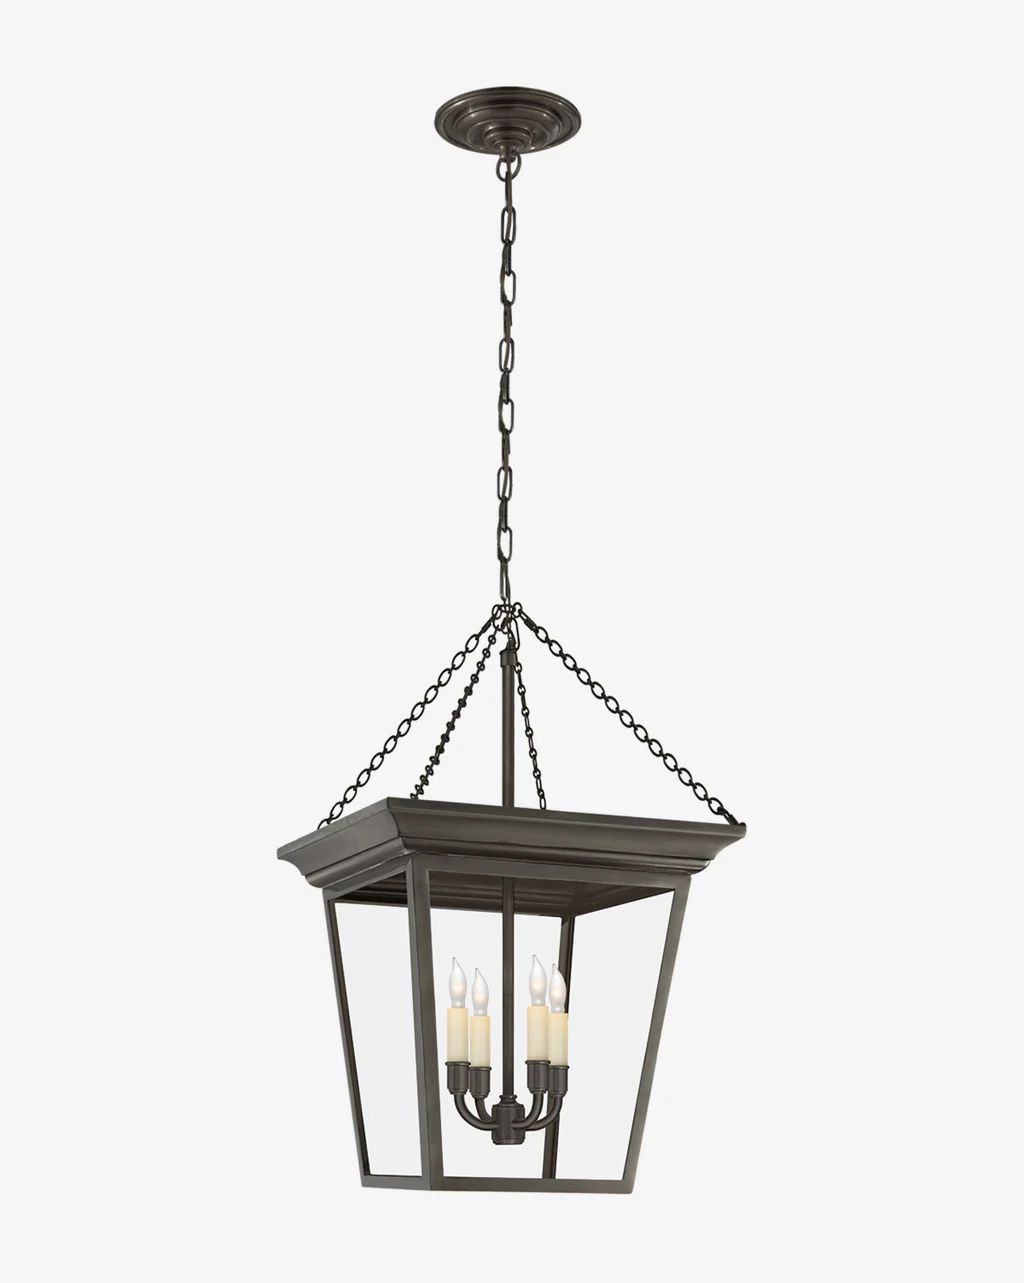 Cornice Small Hanging Lantern | McGee & Co.